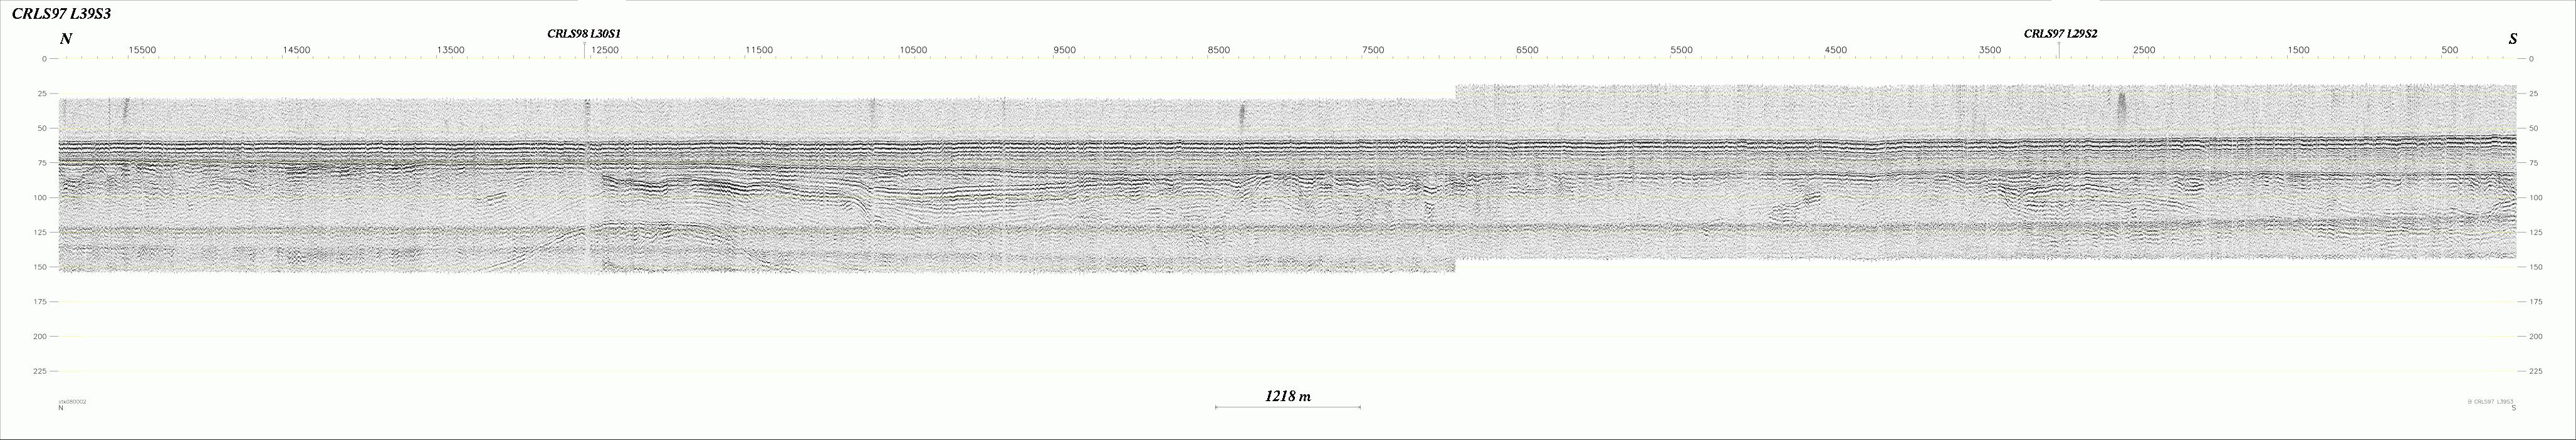 Seismic Reflection Profile Line No.: L39s3 (517285 bytes)